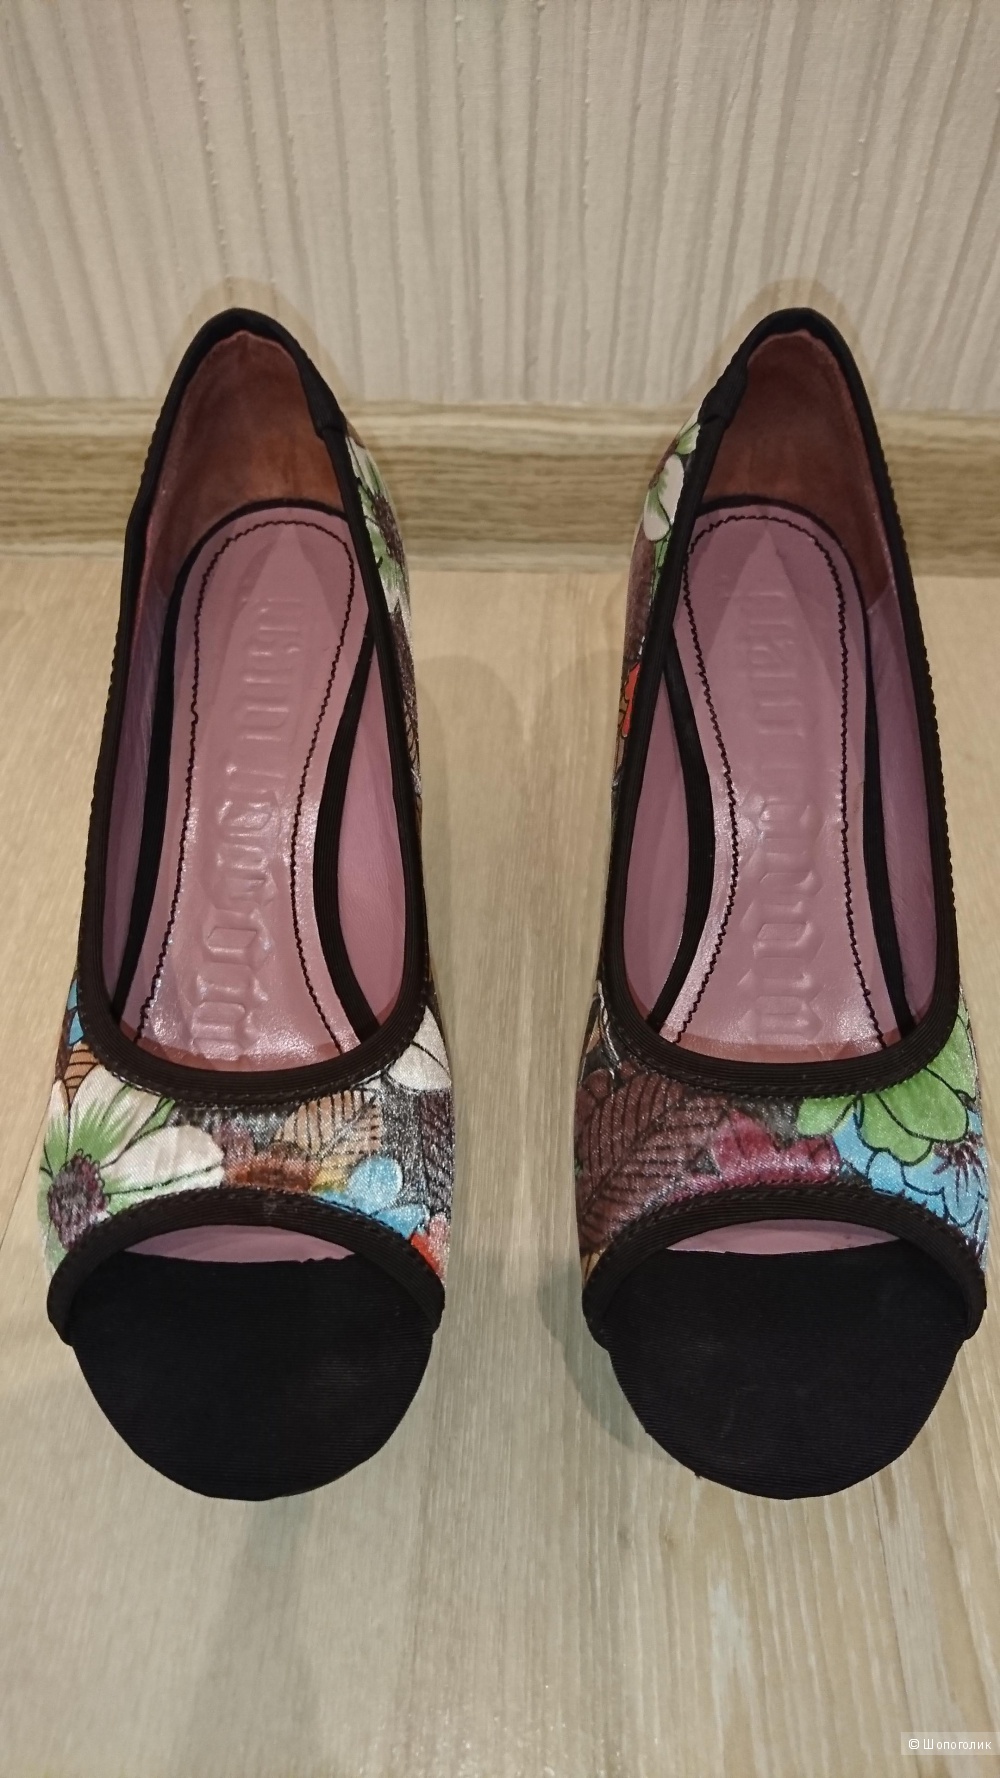 Атласные туфли Paolo Conte, 37 размер